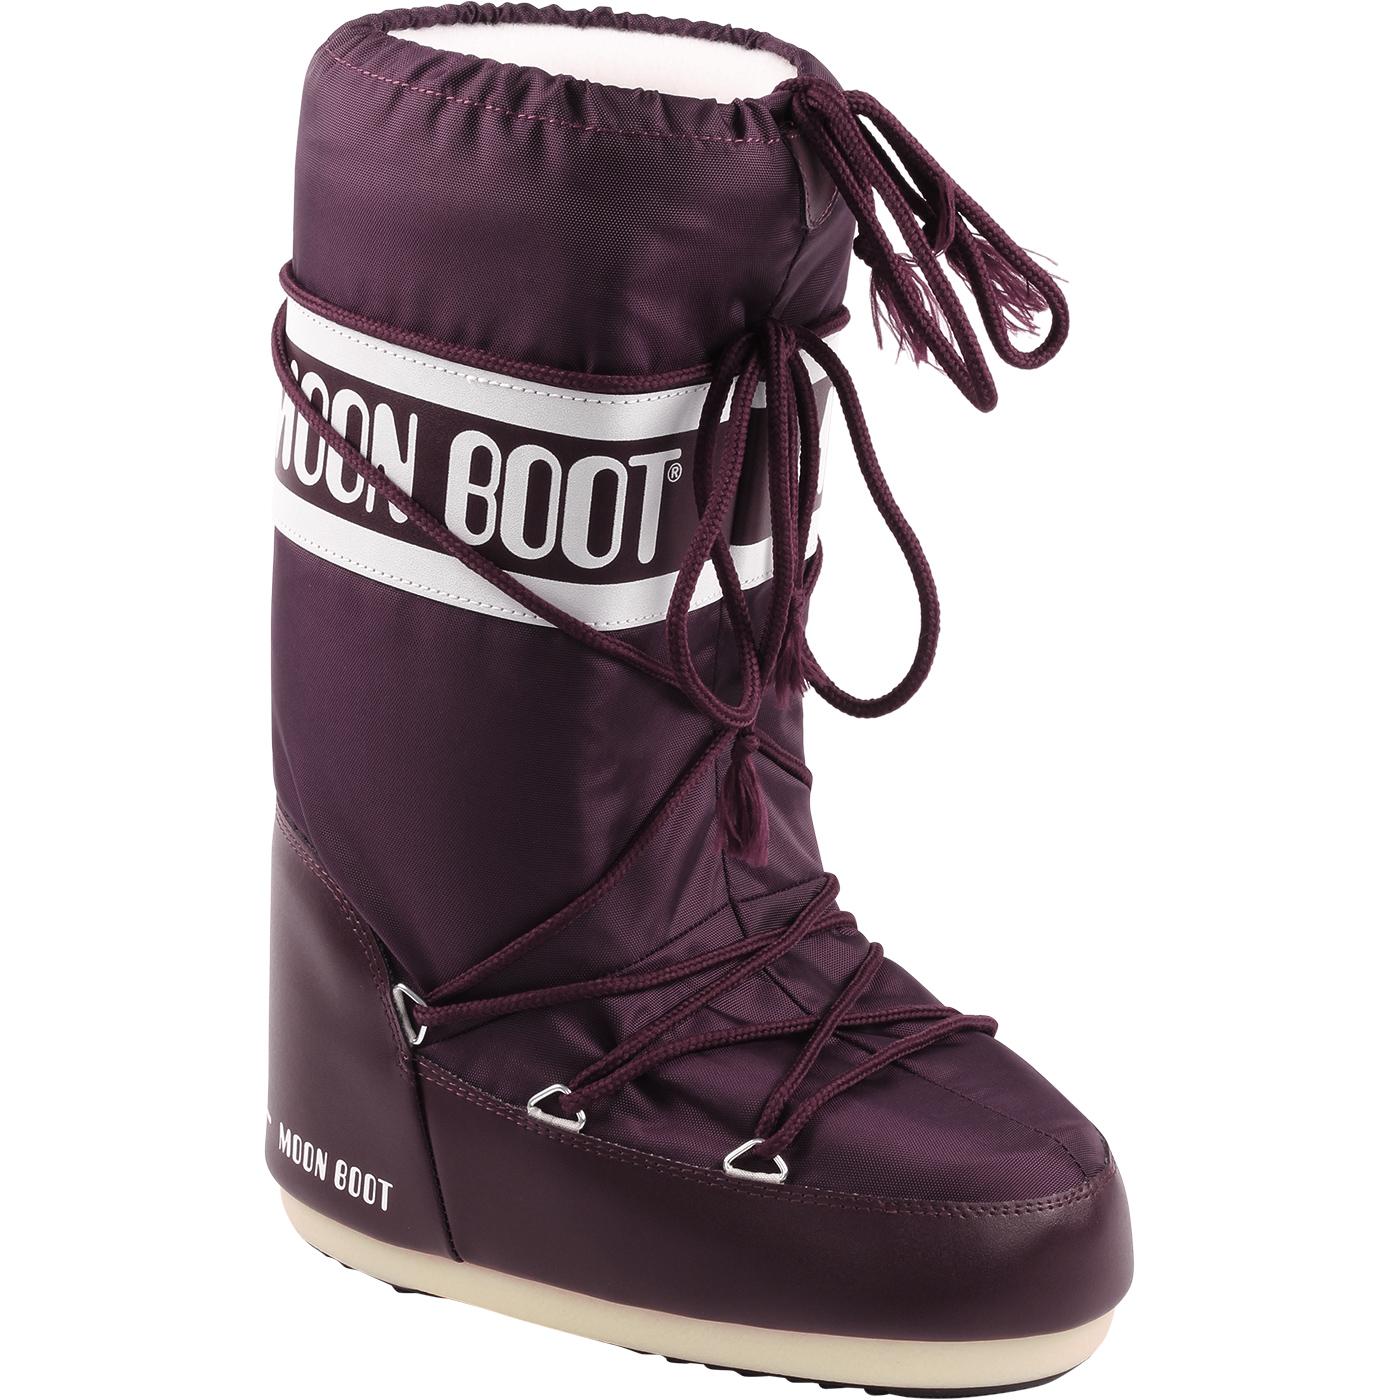 ORIGINAL MOON BOOT Classic Retro 70s Snow Boots B